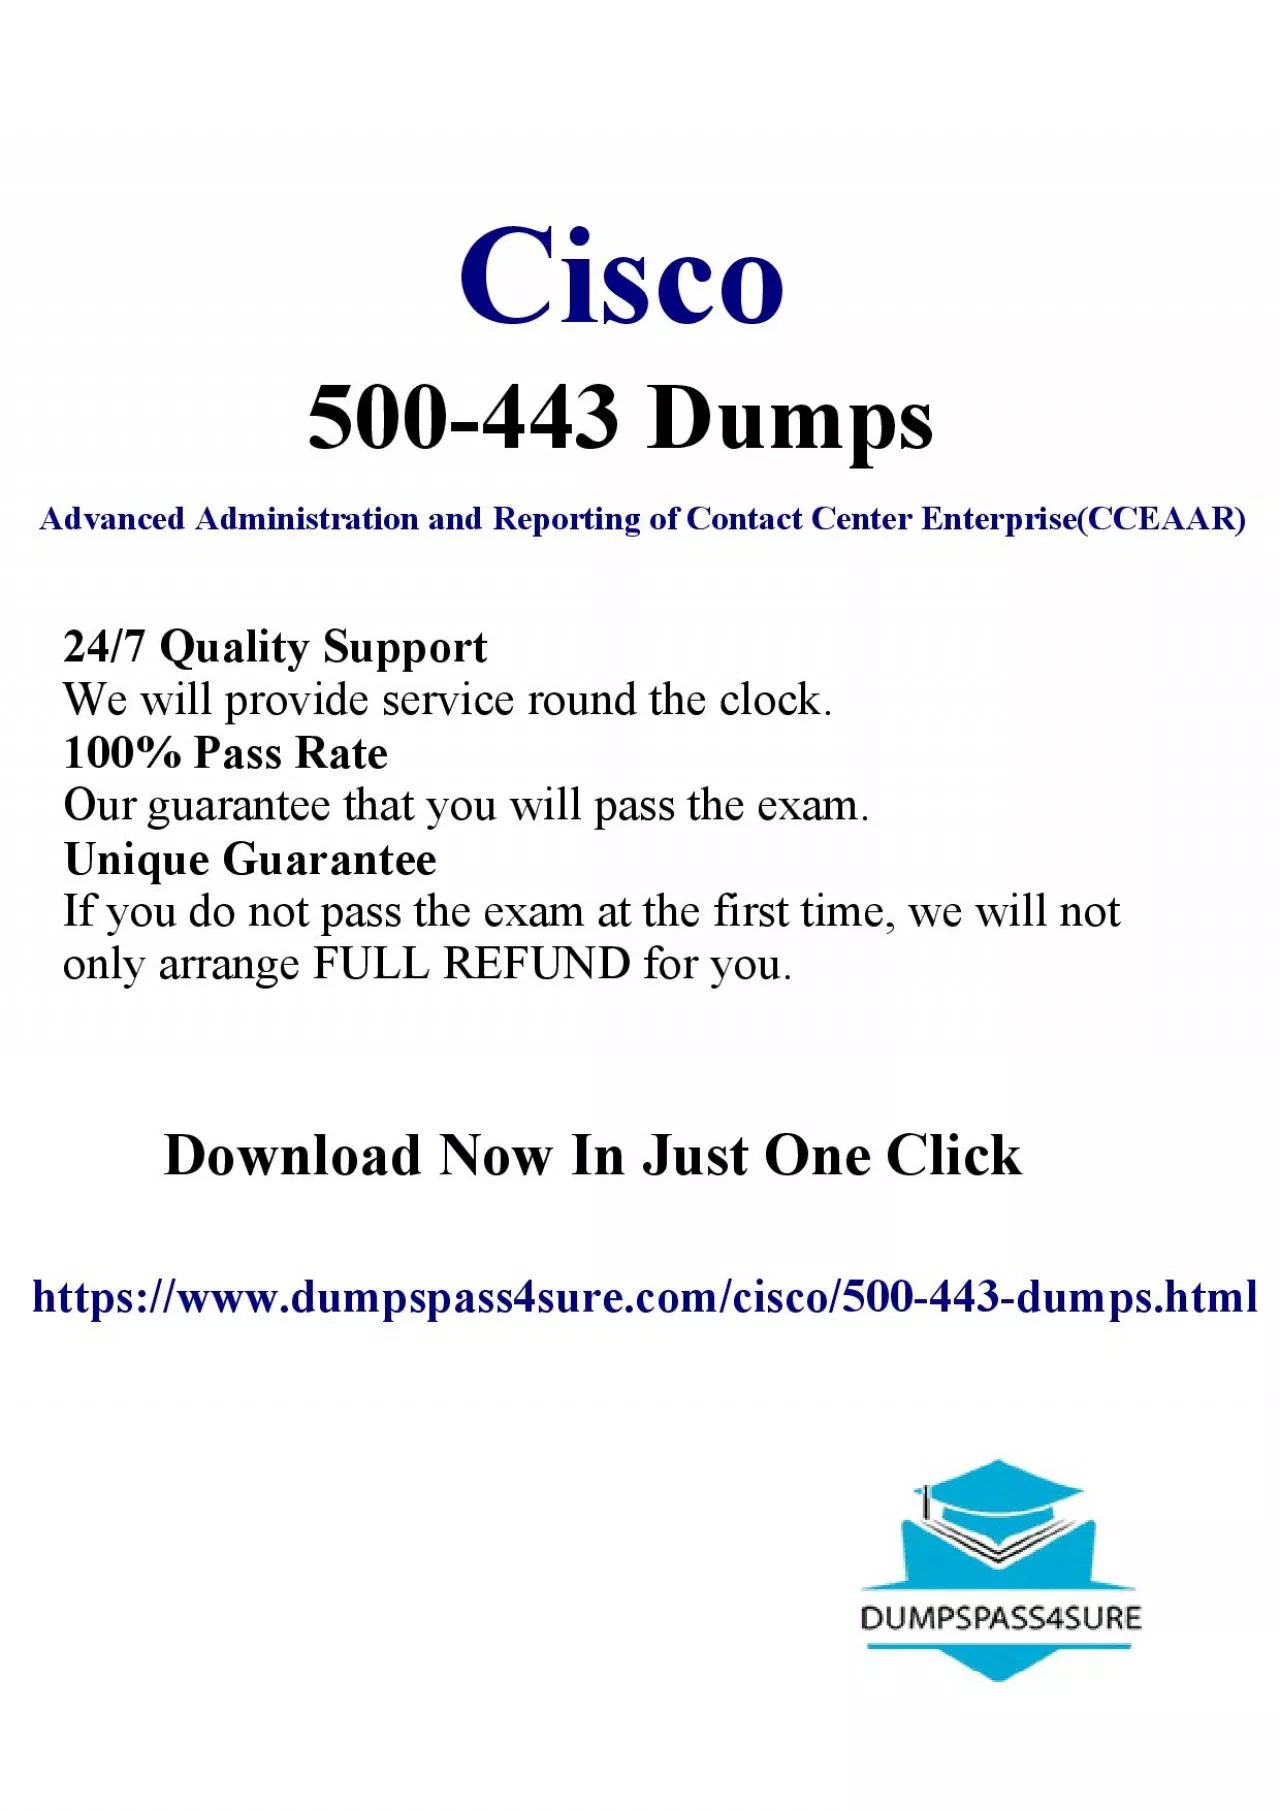 Unwrap Success: Cisco 500-443 Dumps PDF at 20% Off – Bliss or Nice List? with DumpsPass4Sure